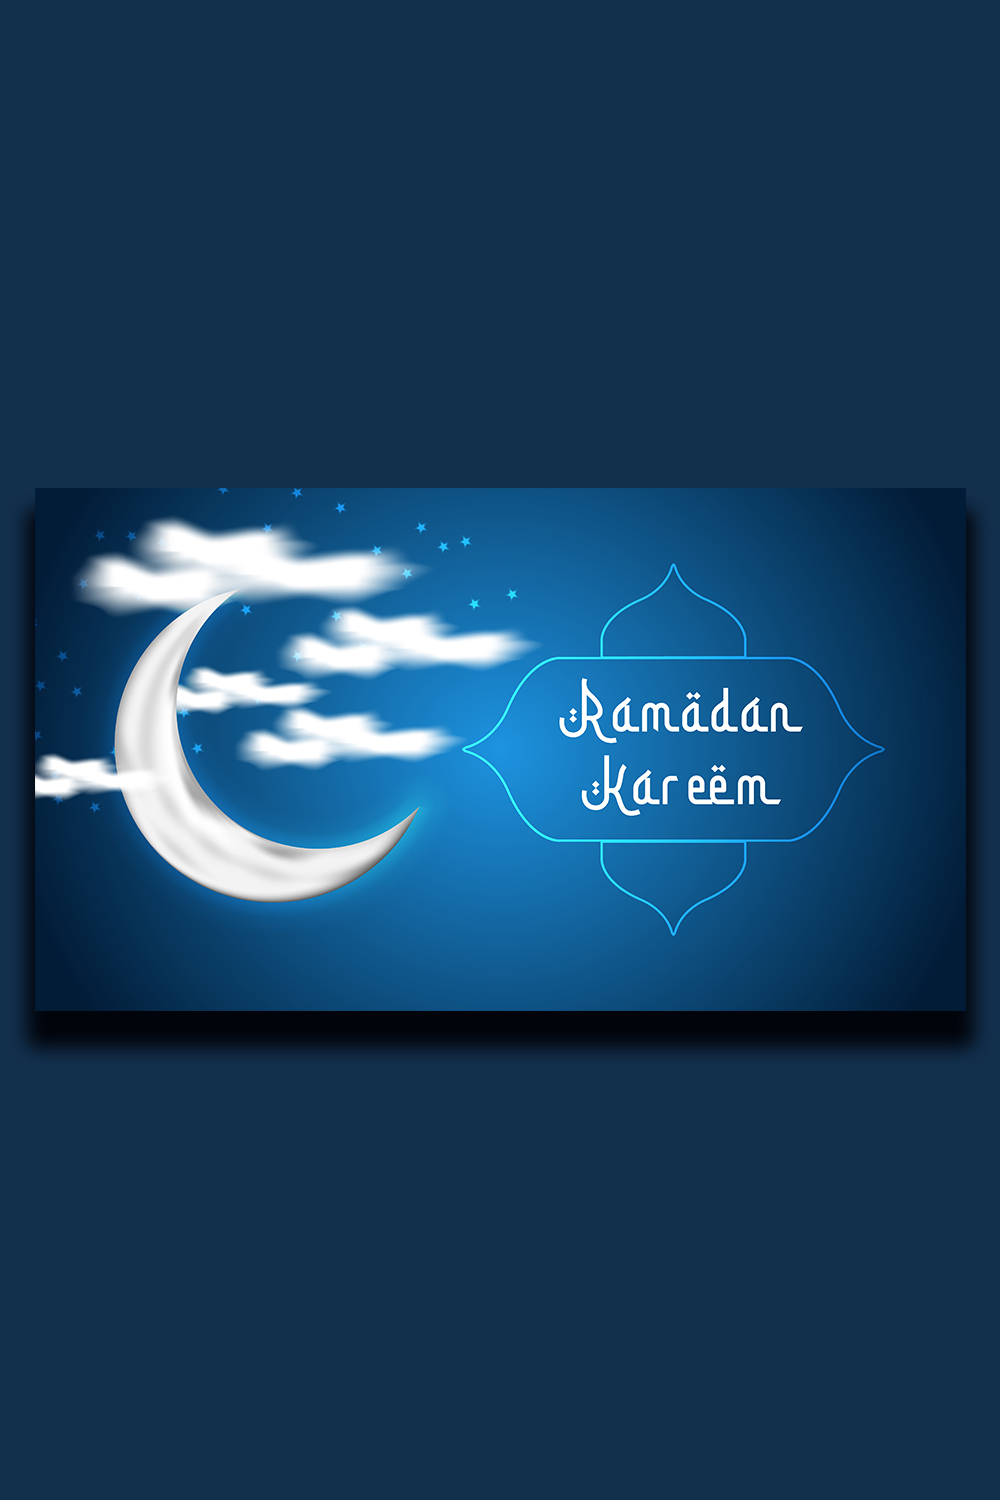 Ramadan kareem greetings banner design with night sky pinterest preview image.